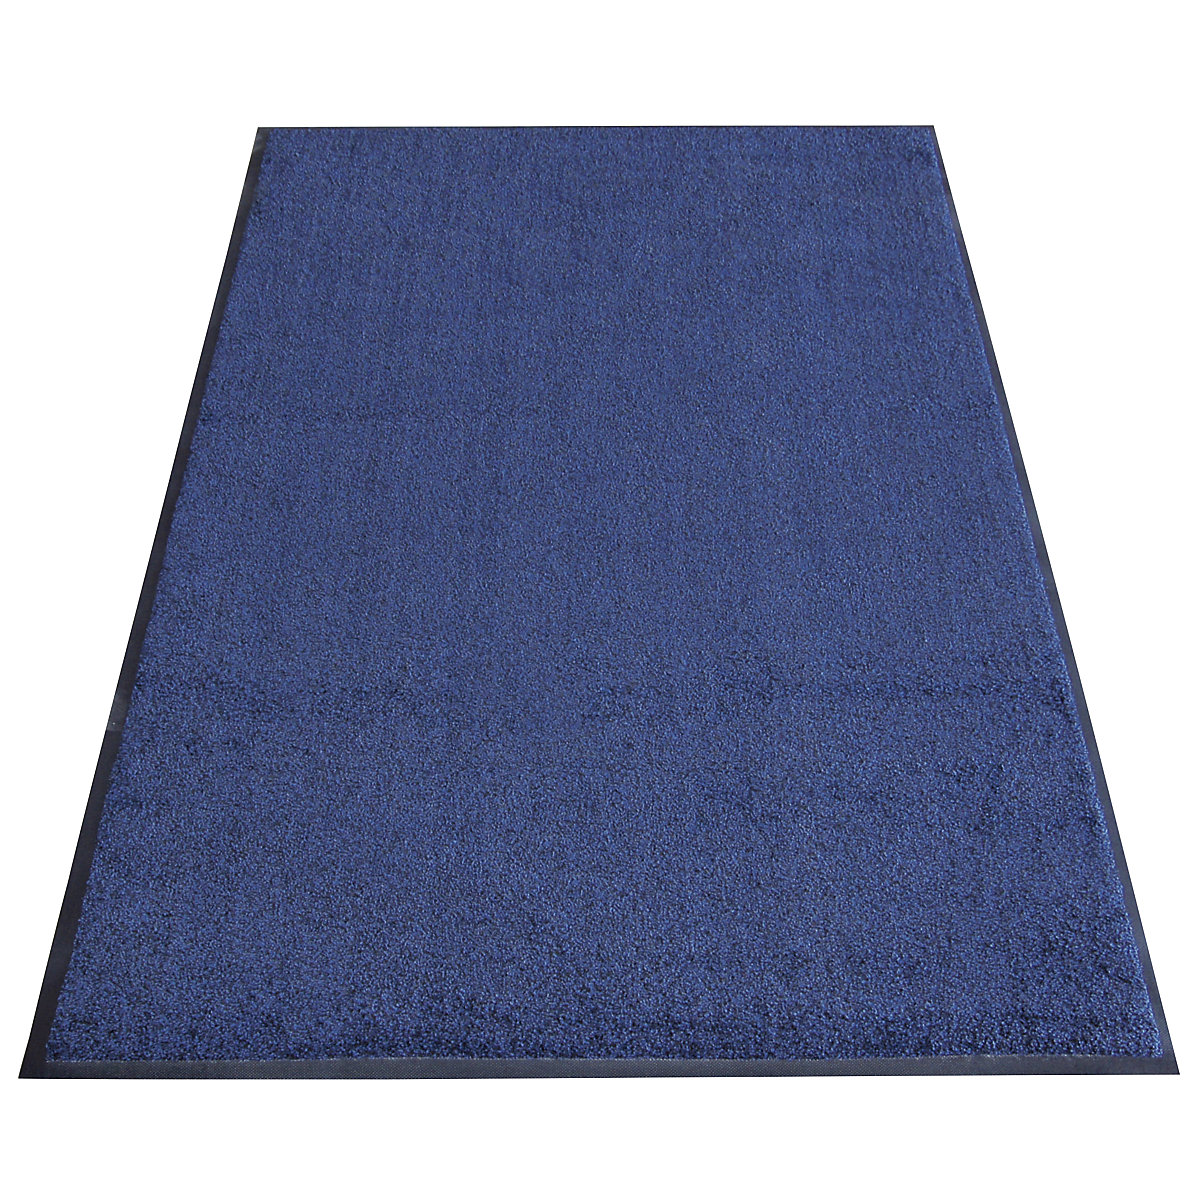 EAZYCARE WASH entrance matting, LxW 2400 x 1150 mm, blue